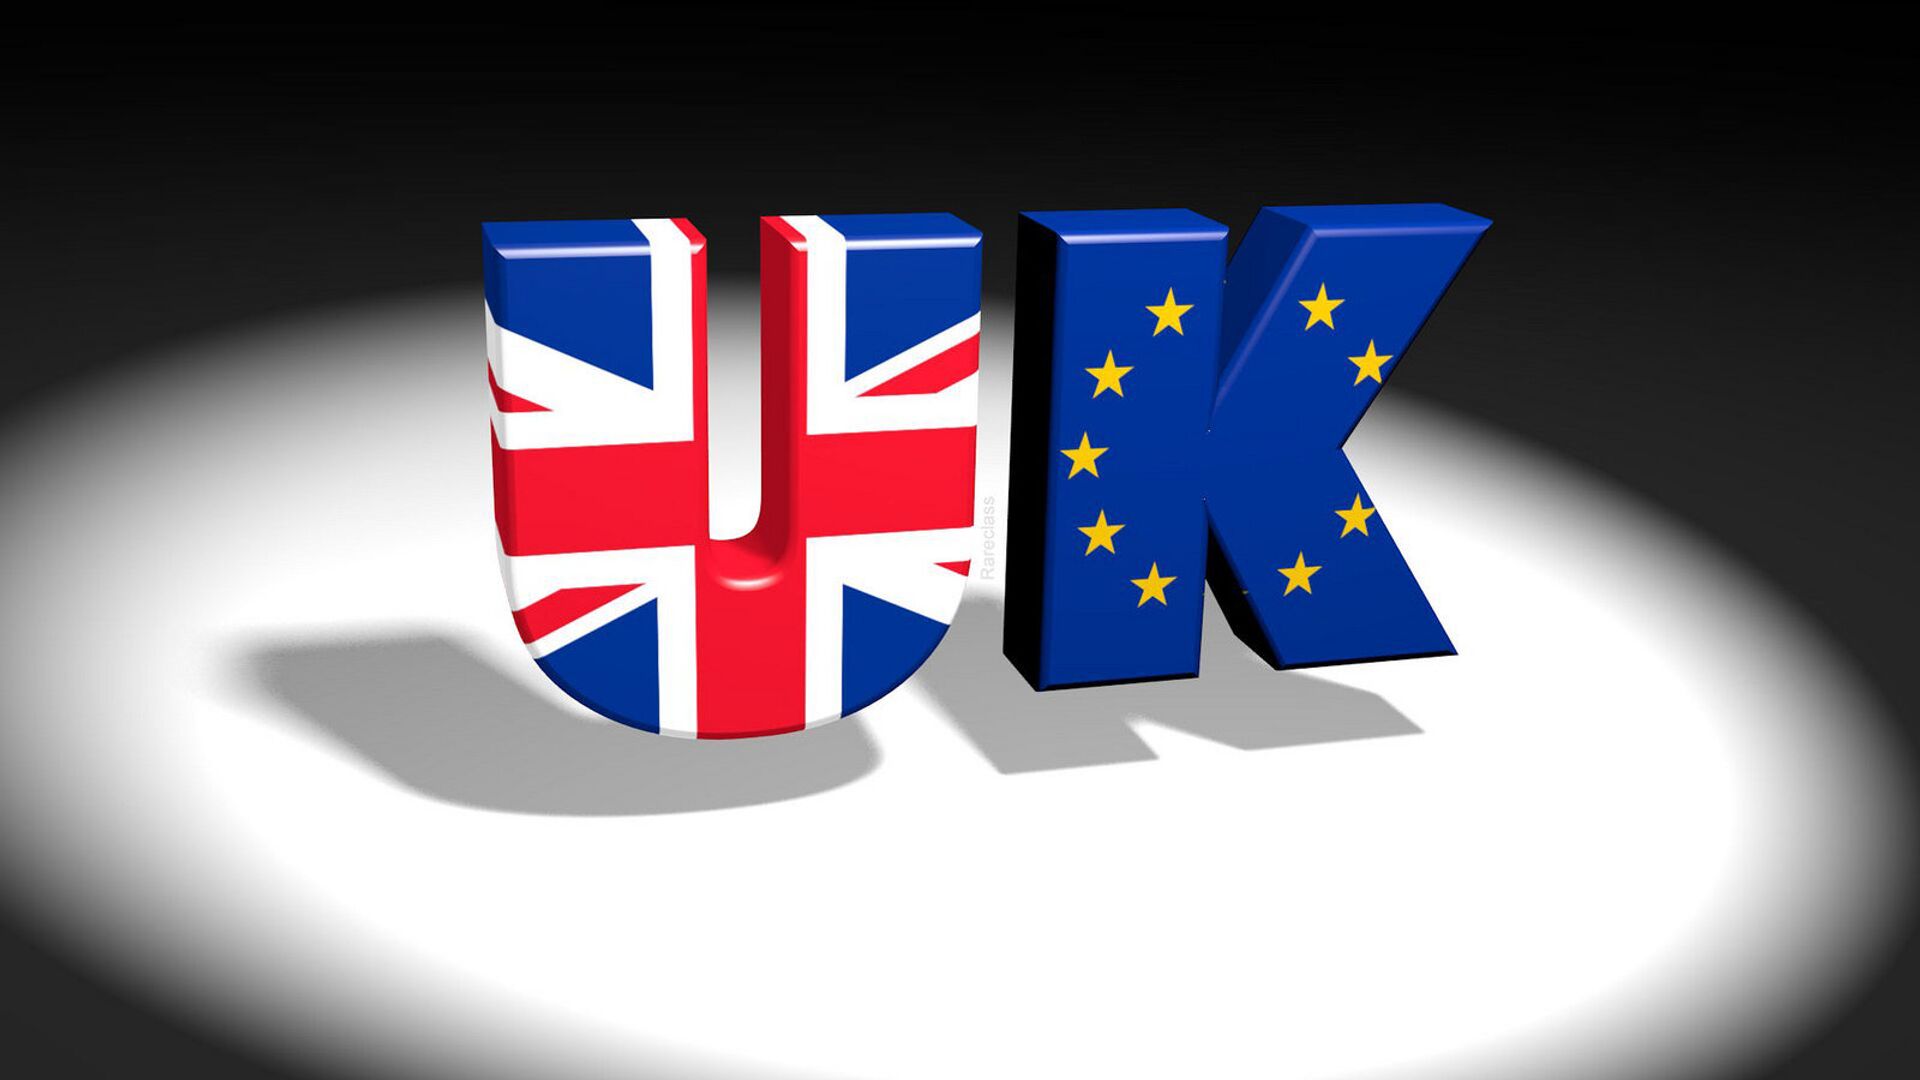 UK/EU text logo with Union Jack and European flag images - Sputnik International, 1920, 11.09.2021